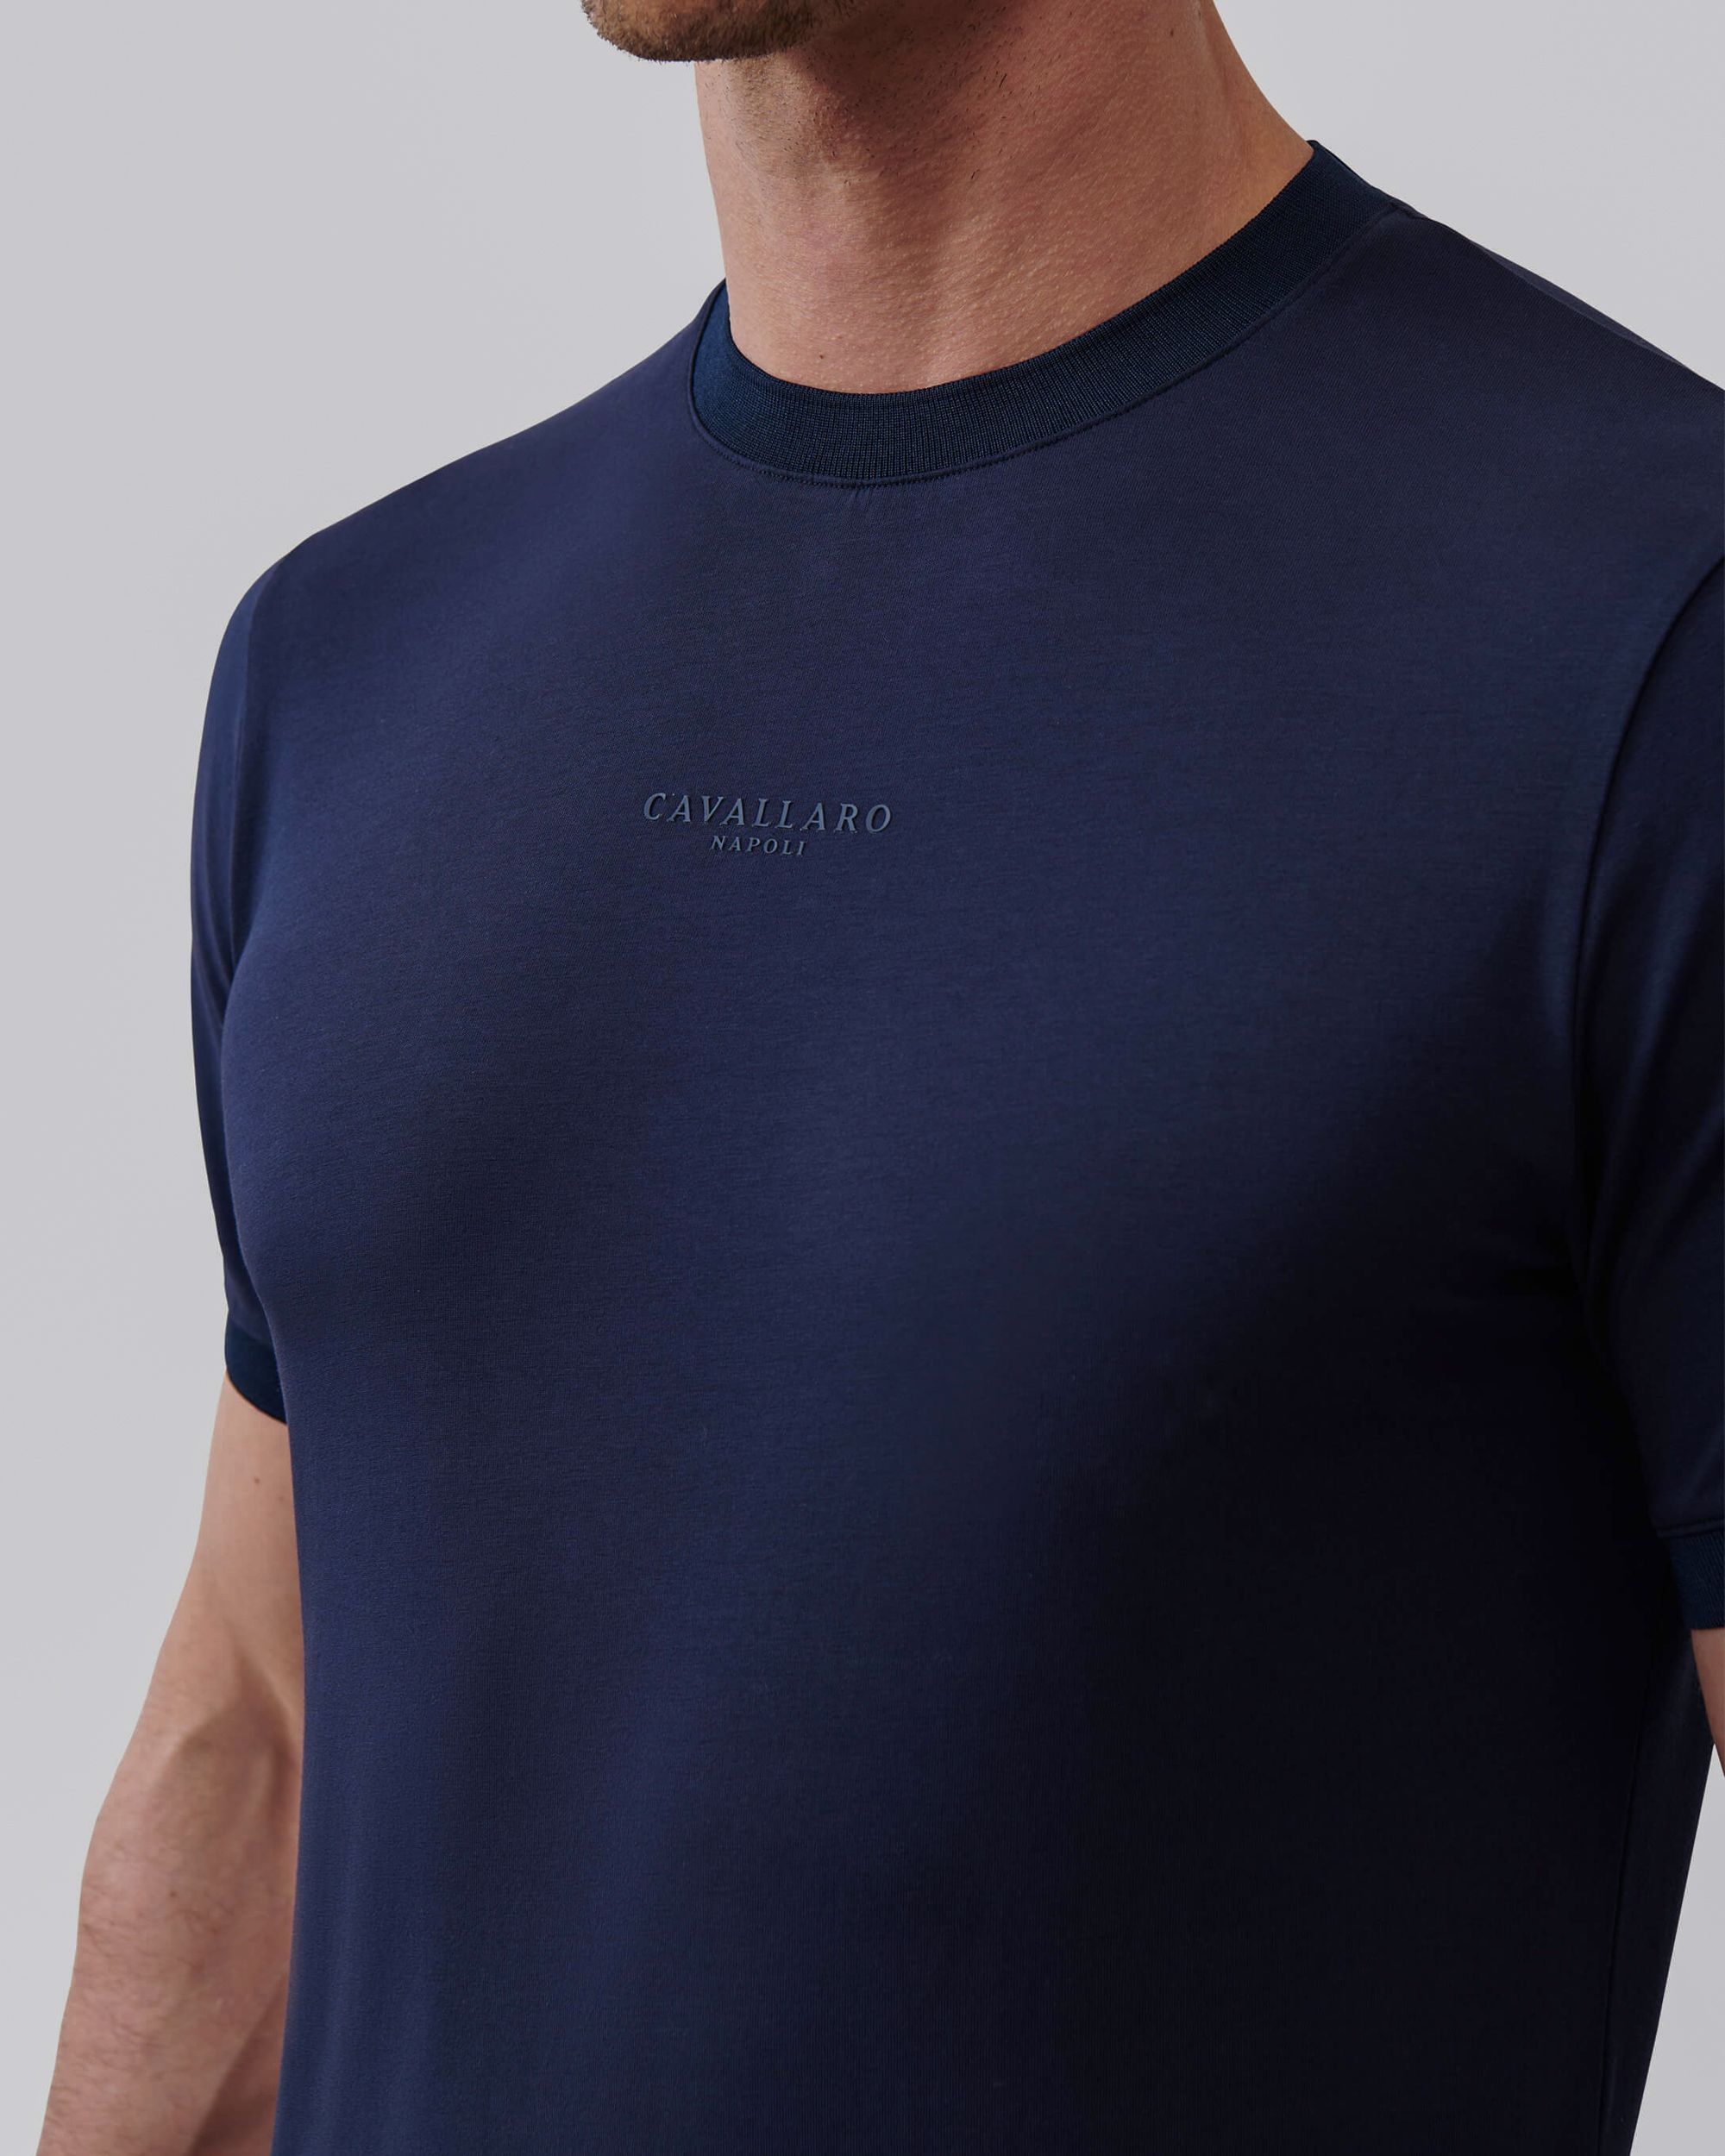 Cavallaro Darenio T-shirt KM Blauw 094421-001-L